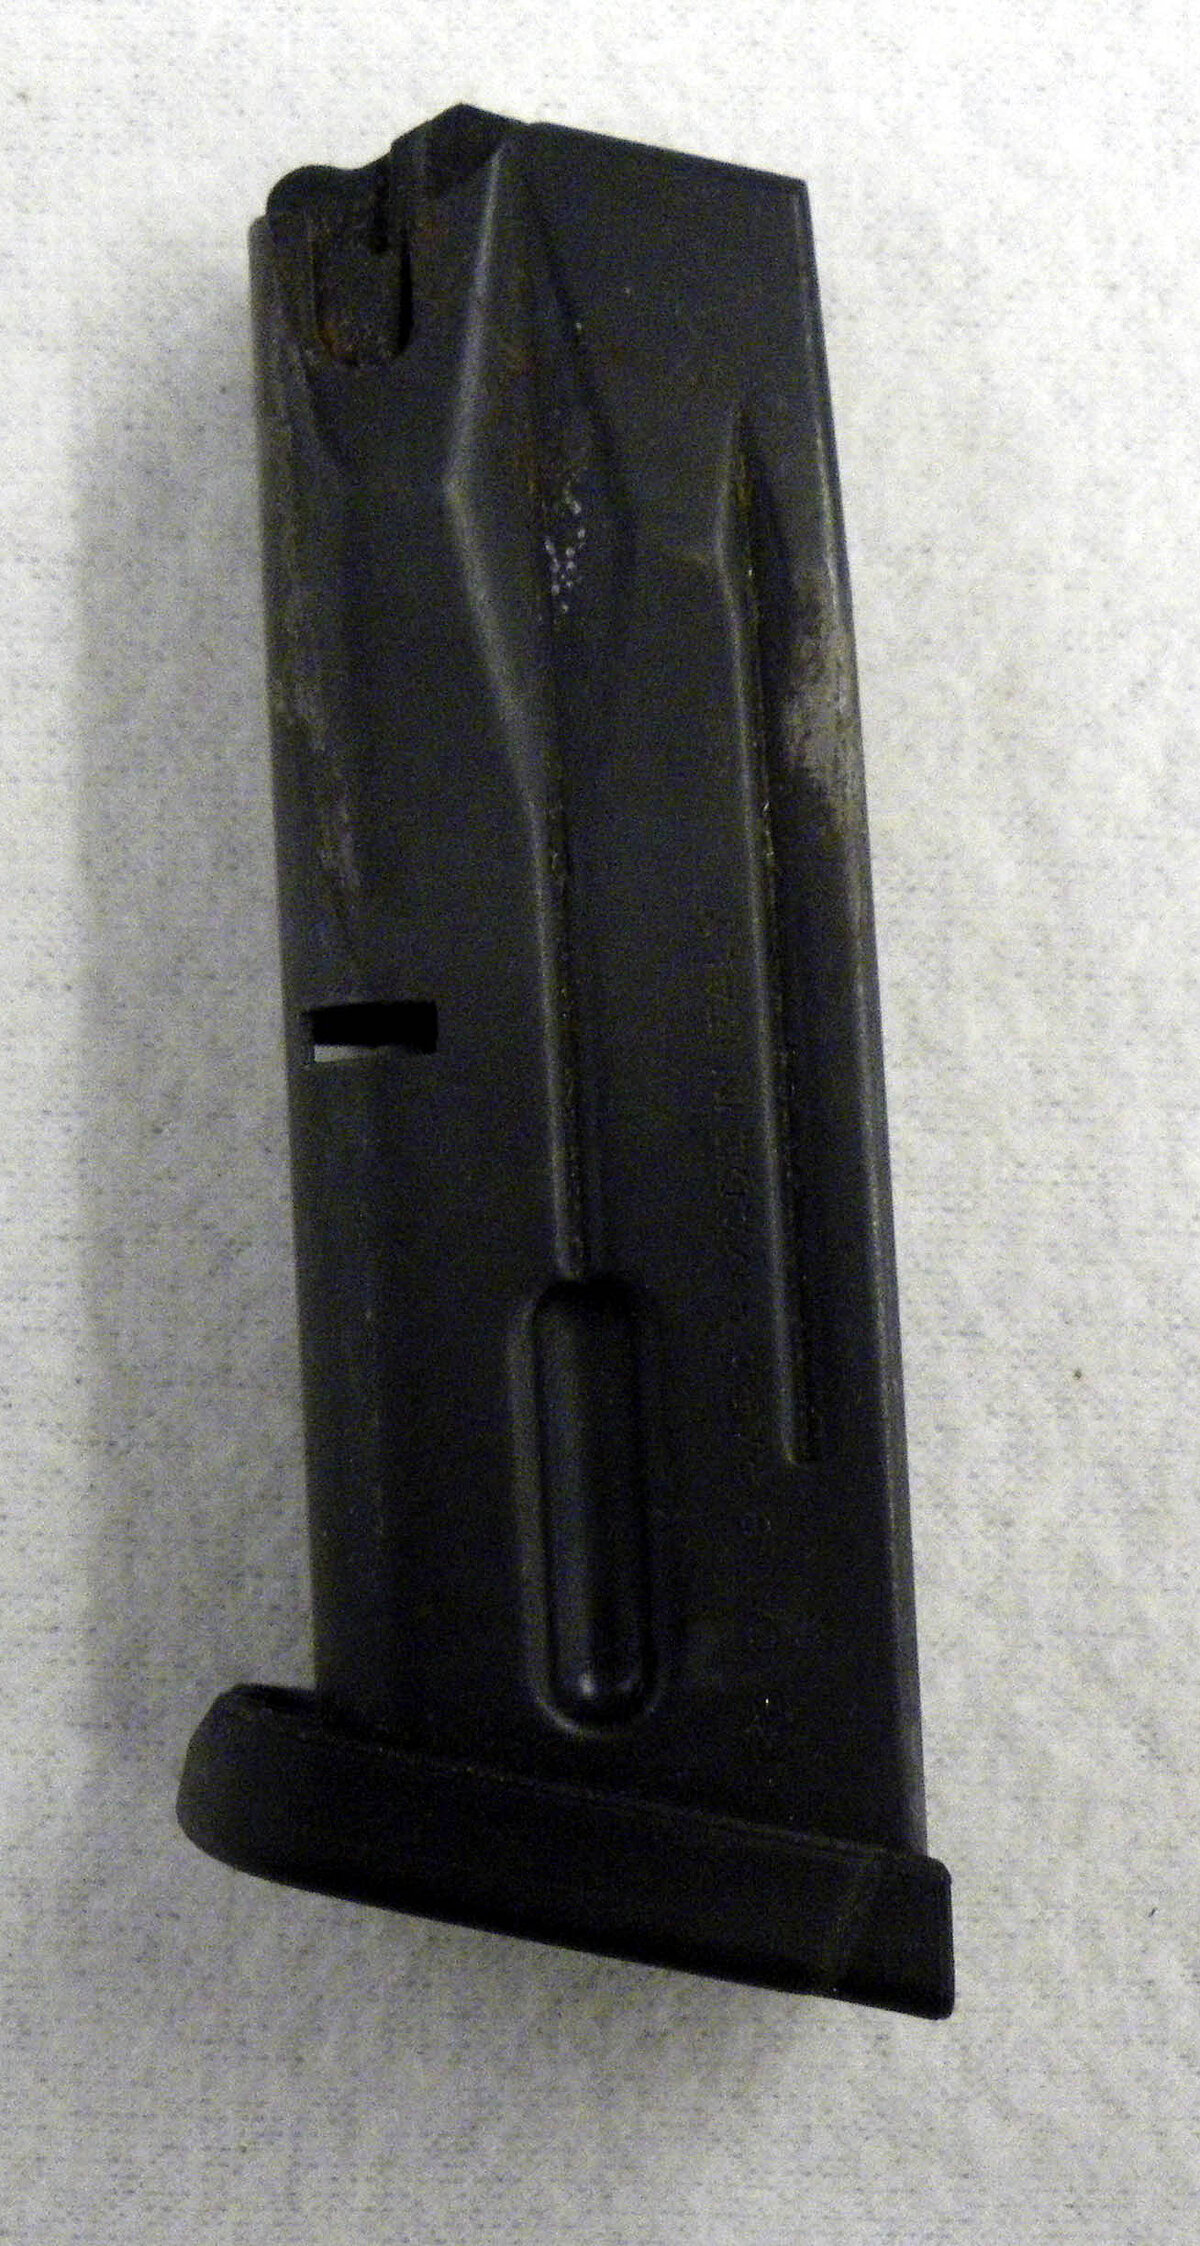 Magazin Beretta P9000 9mm Luger